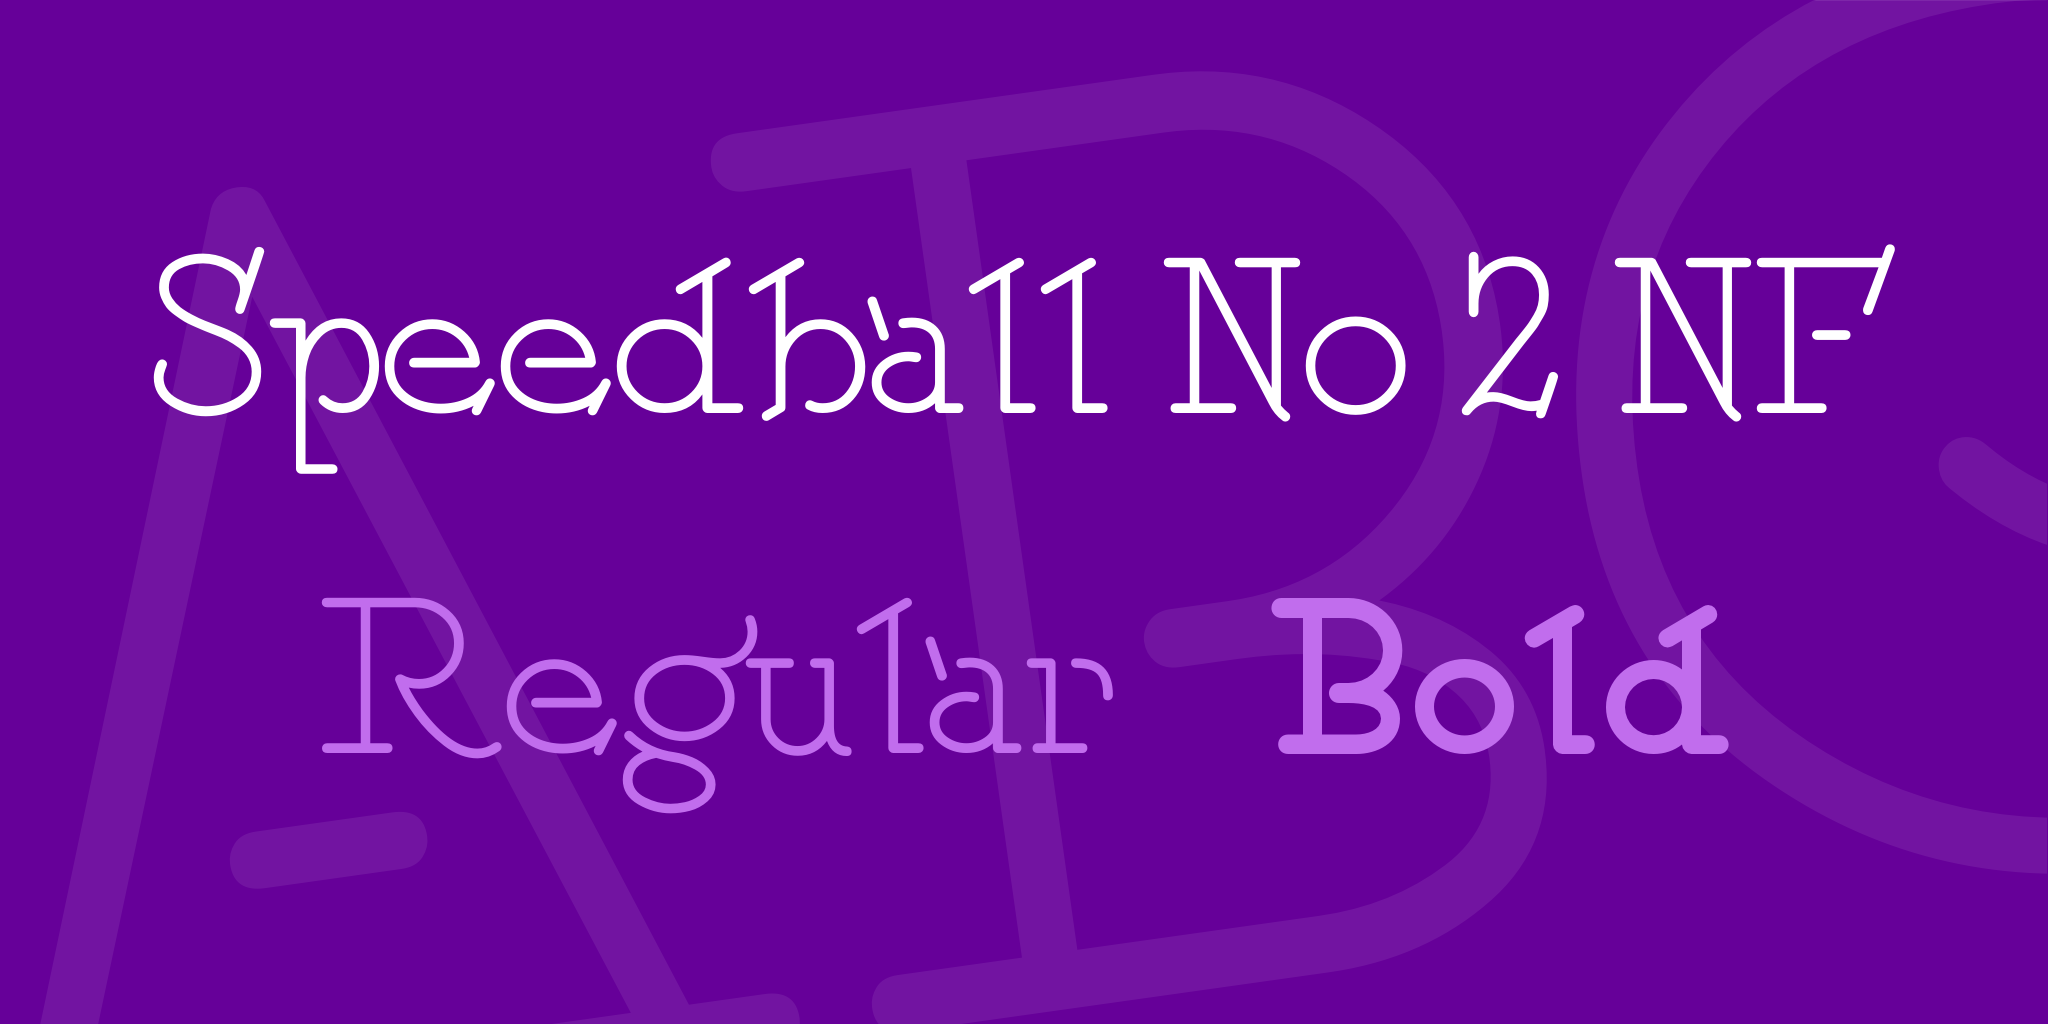 Speedball No 2 Nf